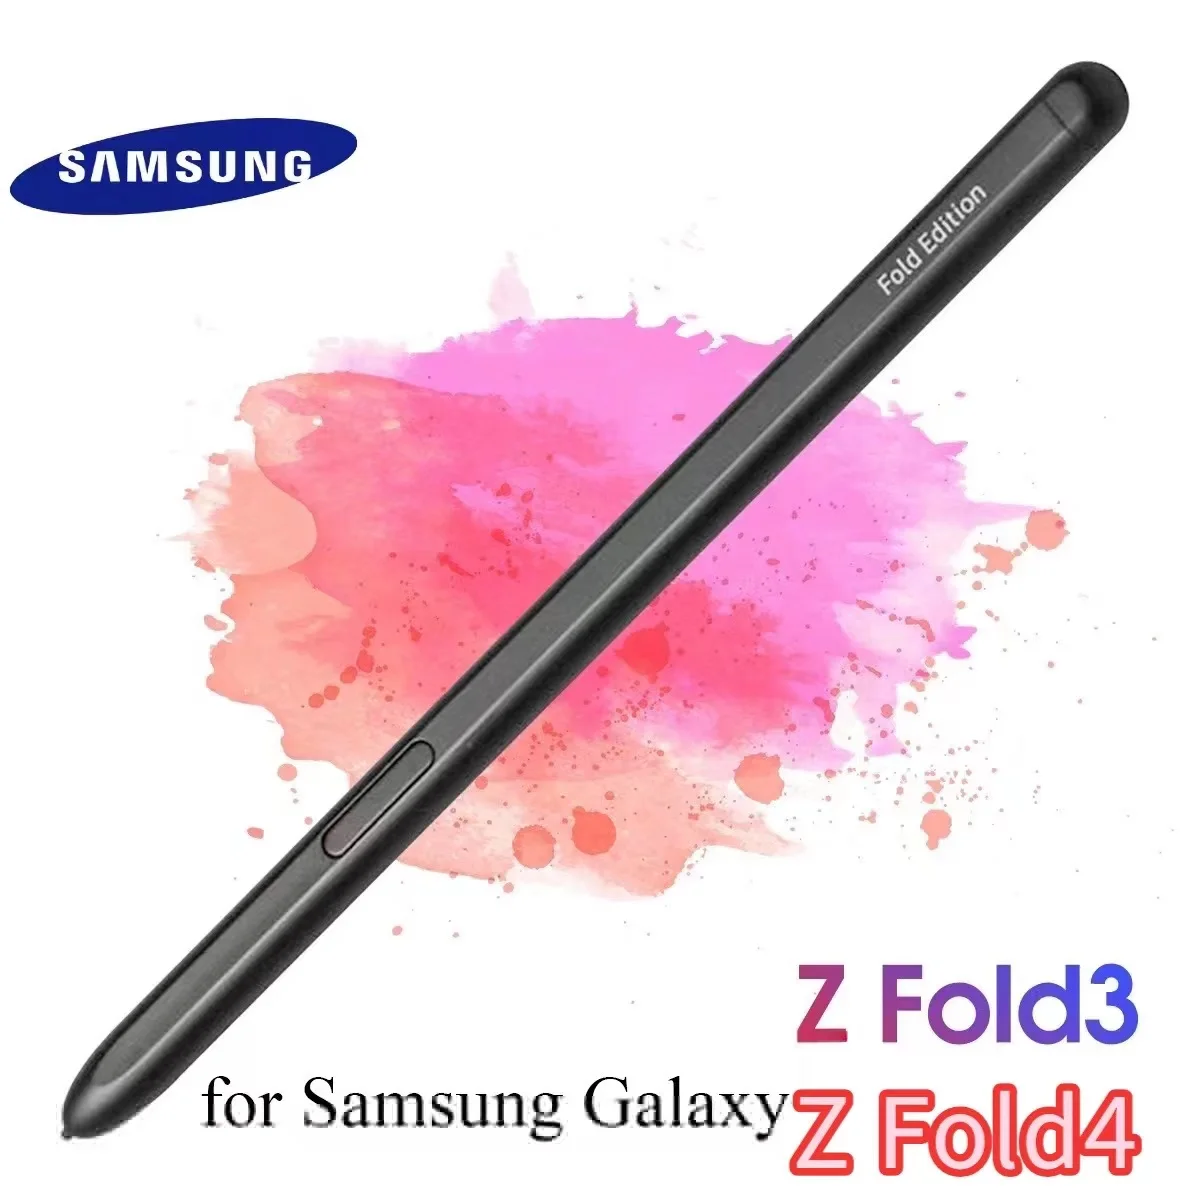 

Active Stylus Capacitive Screen Touch Pen For Samsung Galaxy Z Fold 3 Fold4 5G Fold Edition Z Flod4 S Pen Phone Writing Pencil